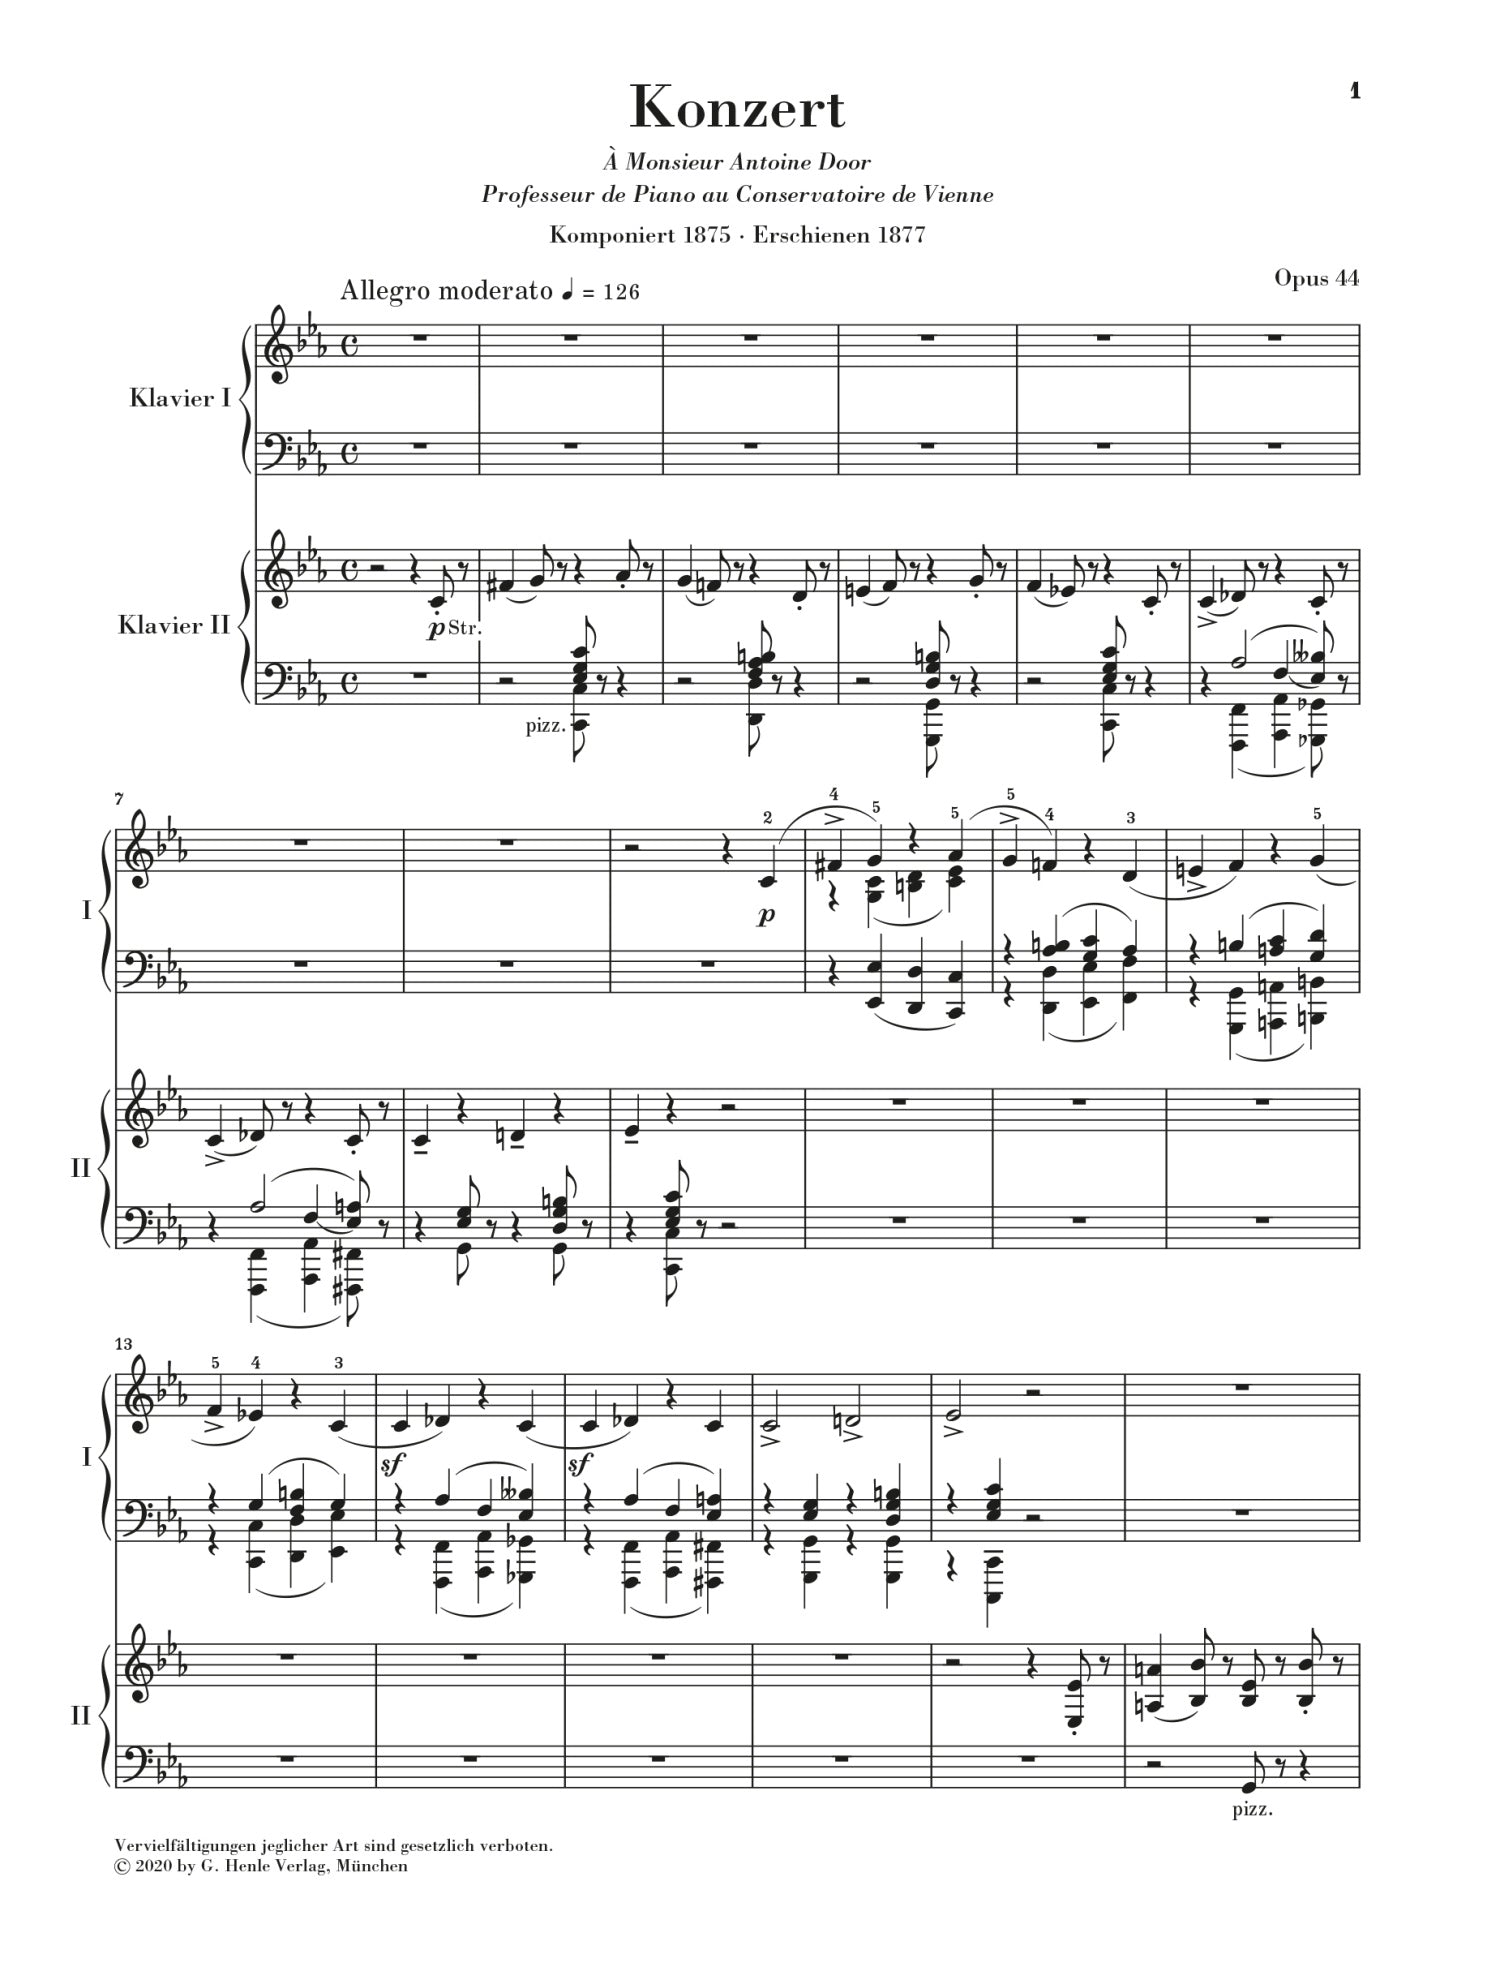 Saint-Saens: Piano Concerto No. 4 in C Minor, Op. 44